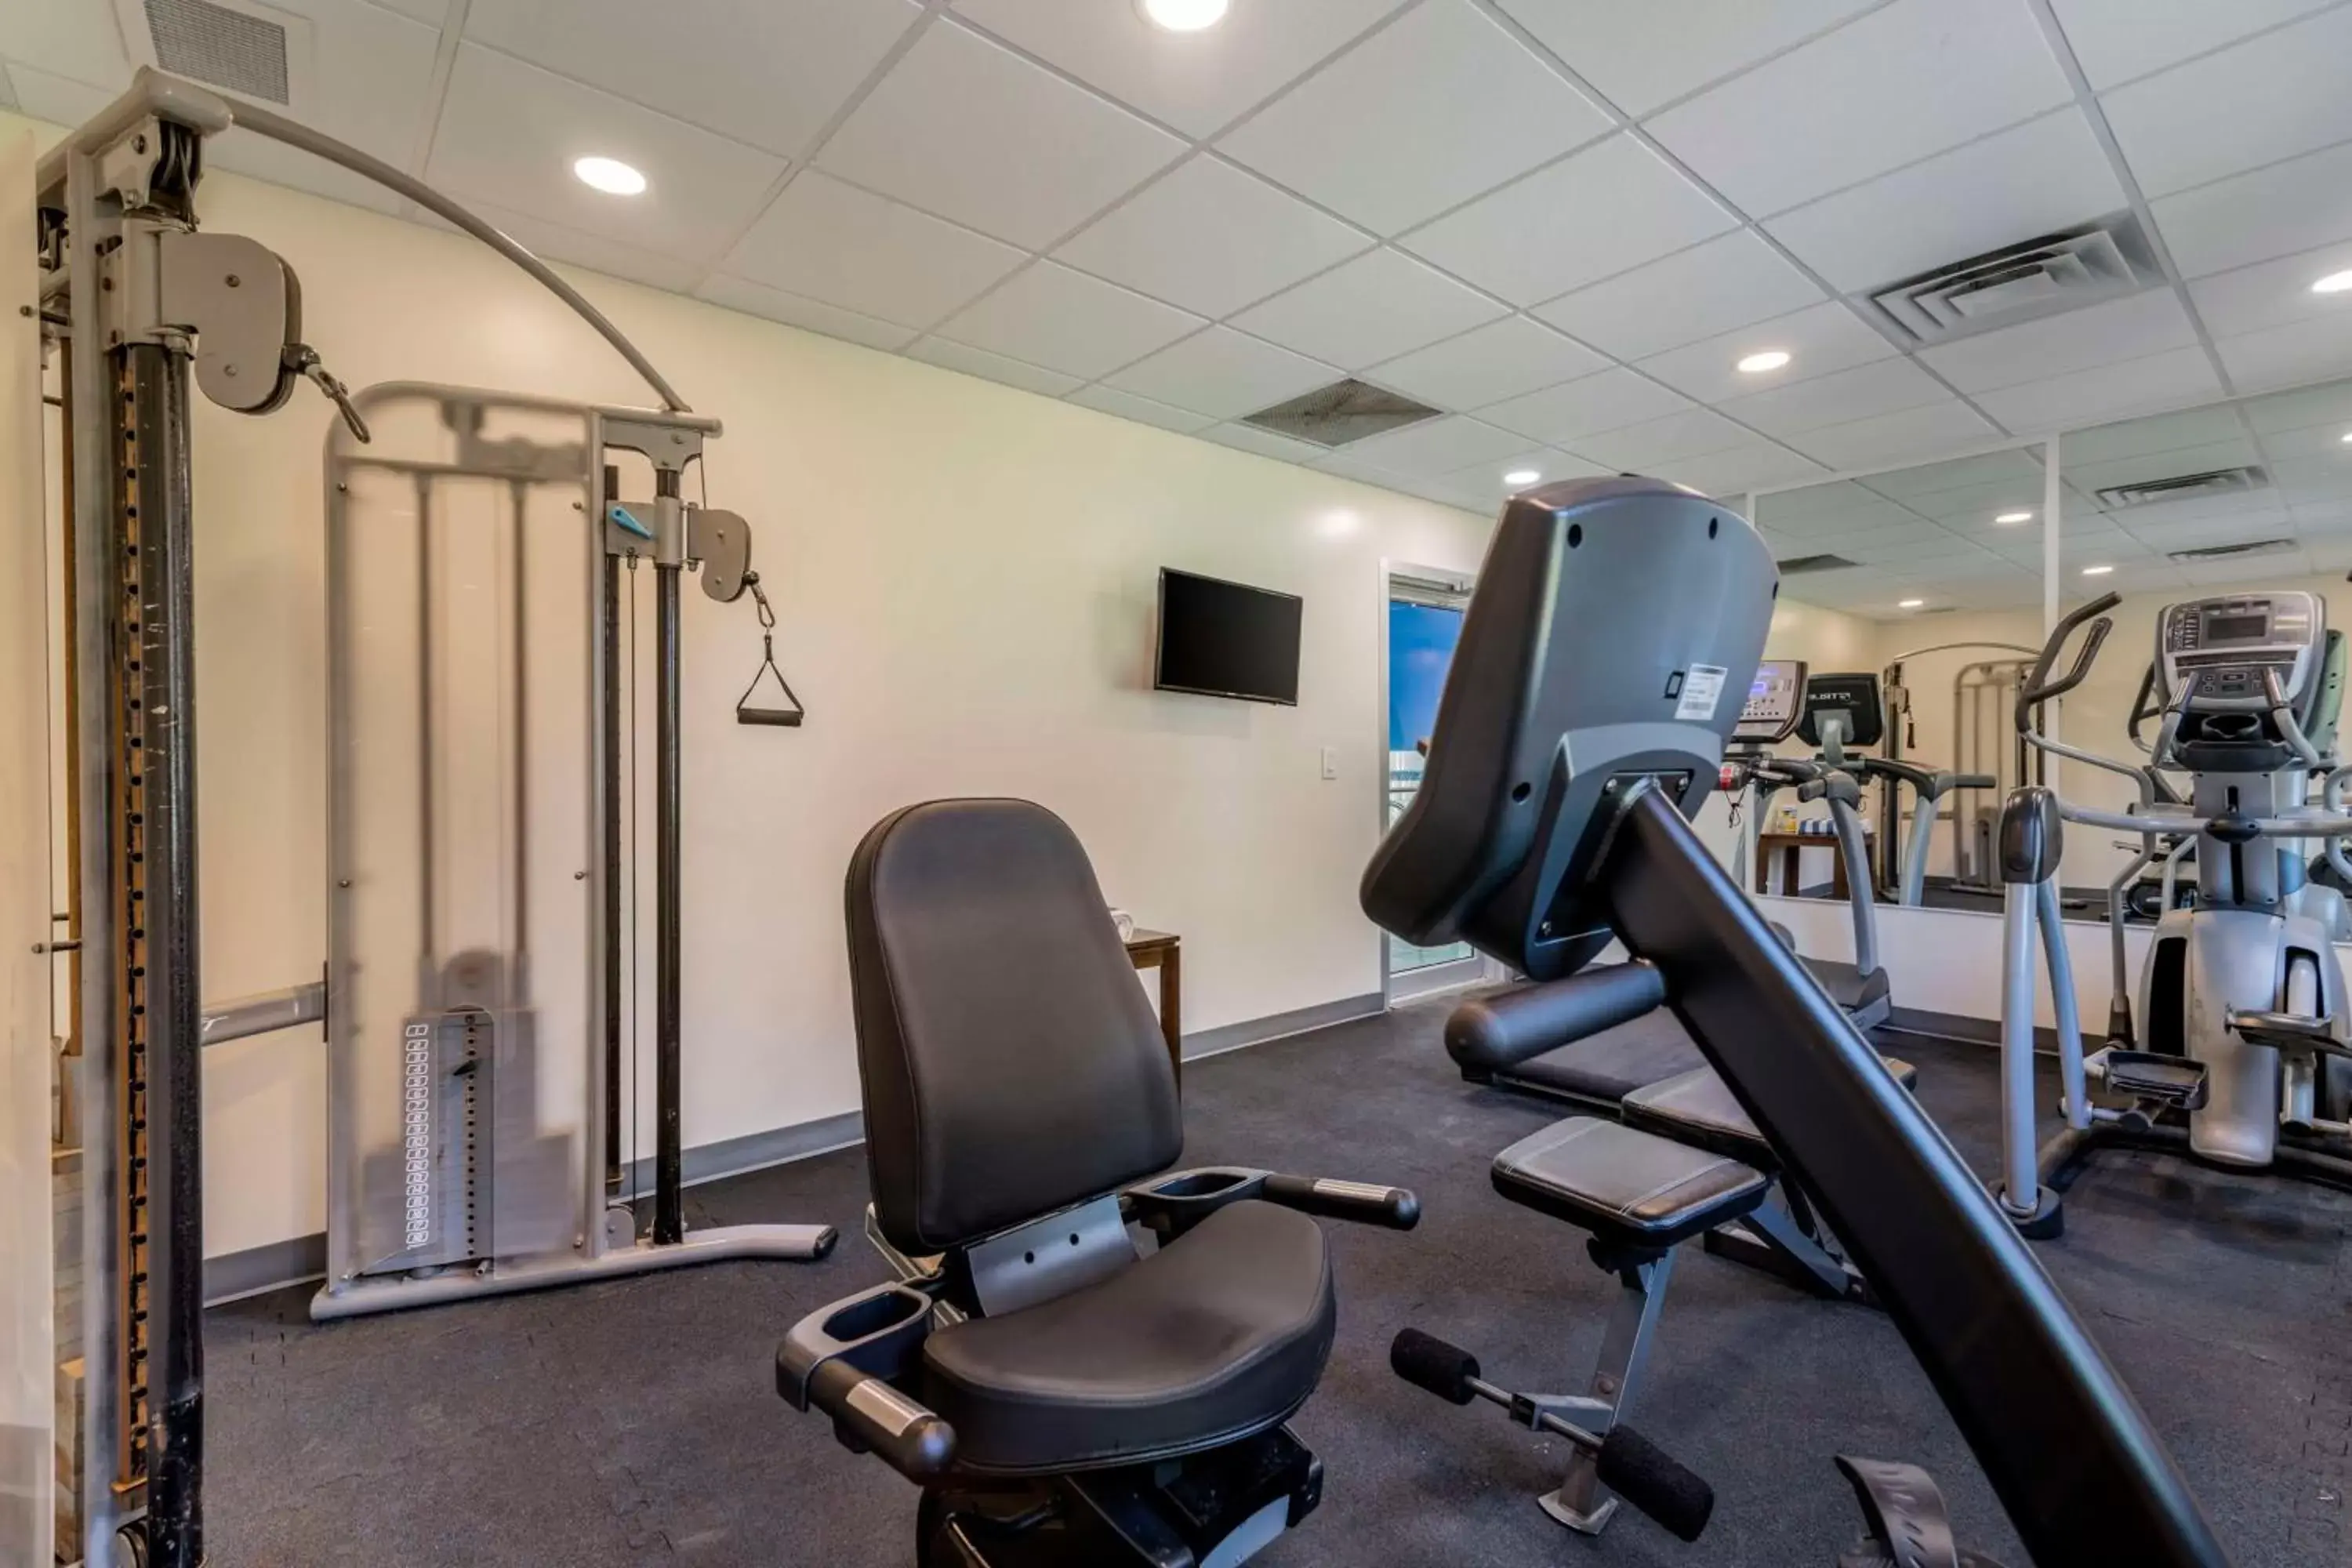 Fitness centre/facilities, Fitness Center/Facilities in Best Western Plus Brunswick Bath